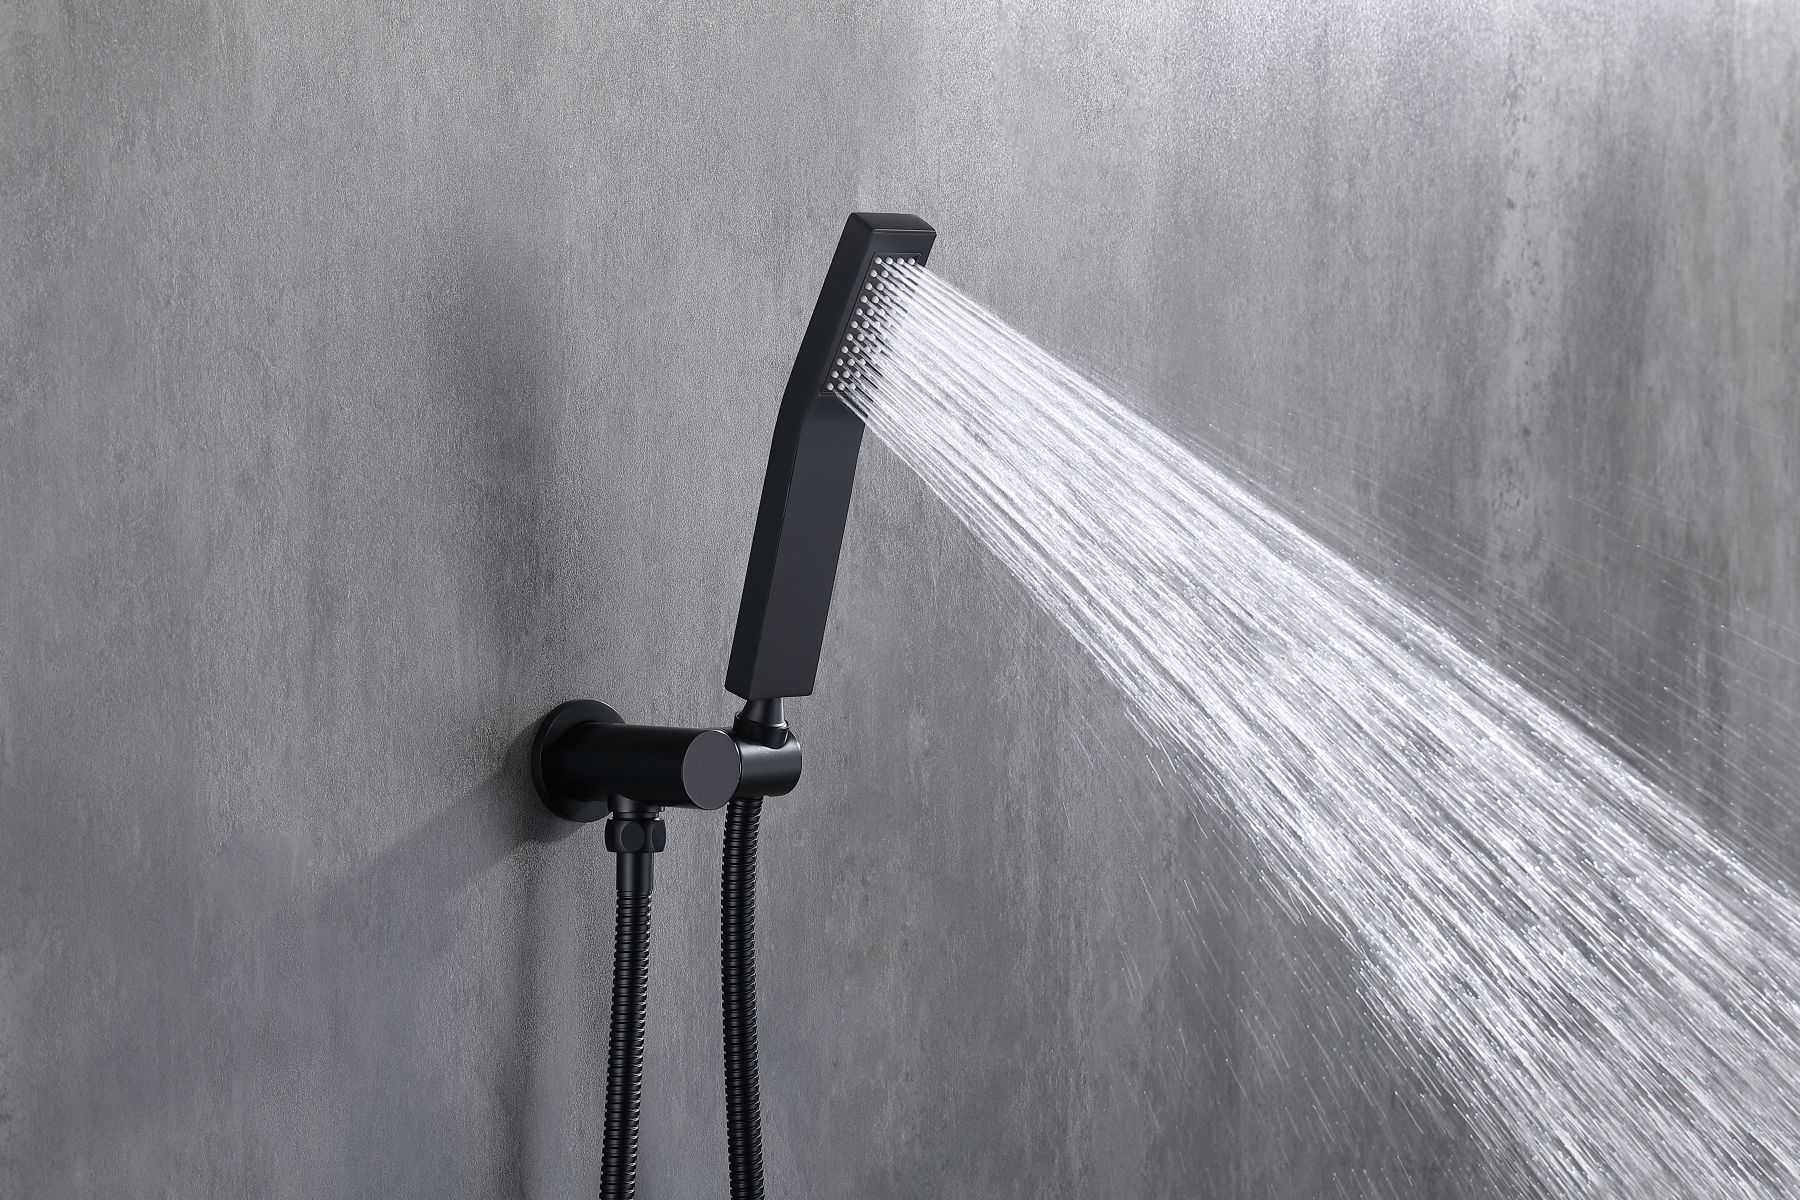 Mixer of Showers hidden with Rainweather condition